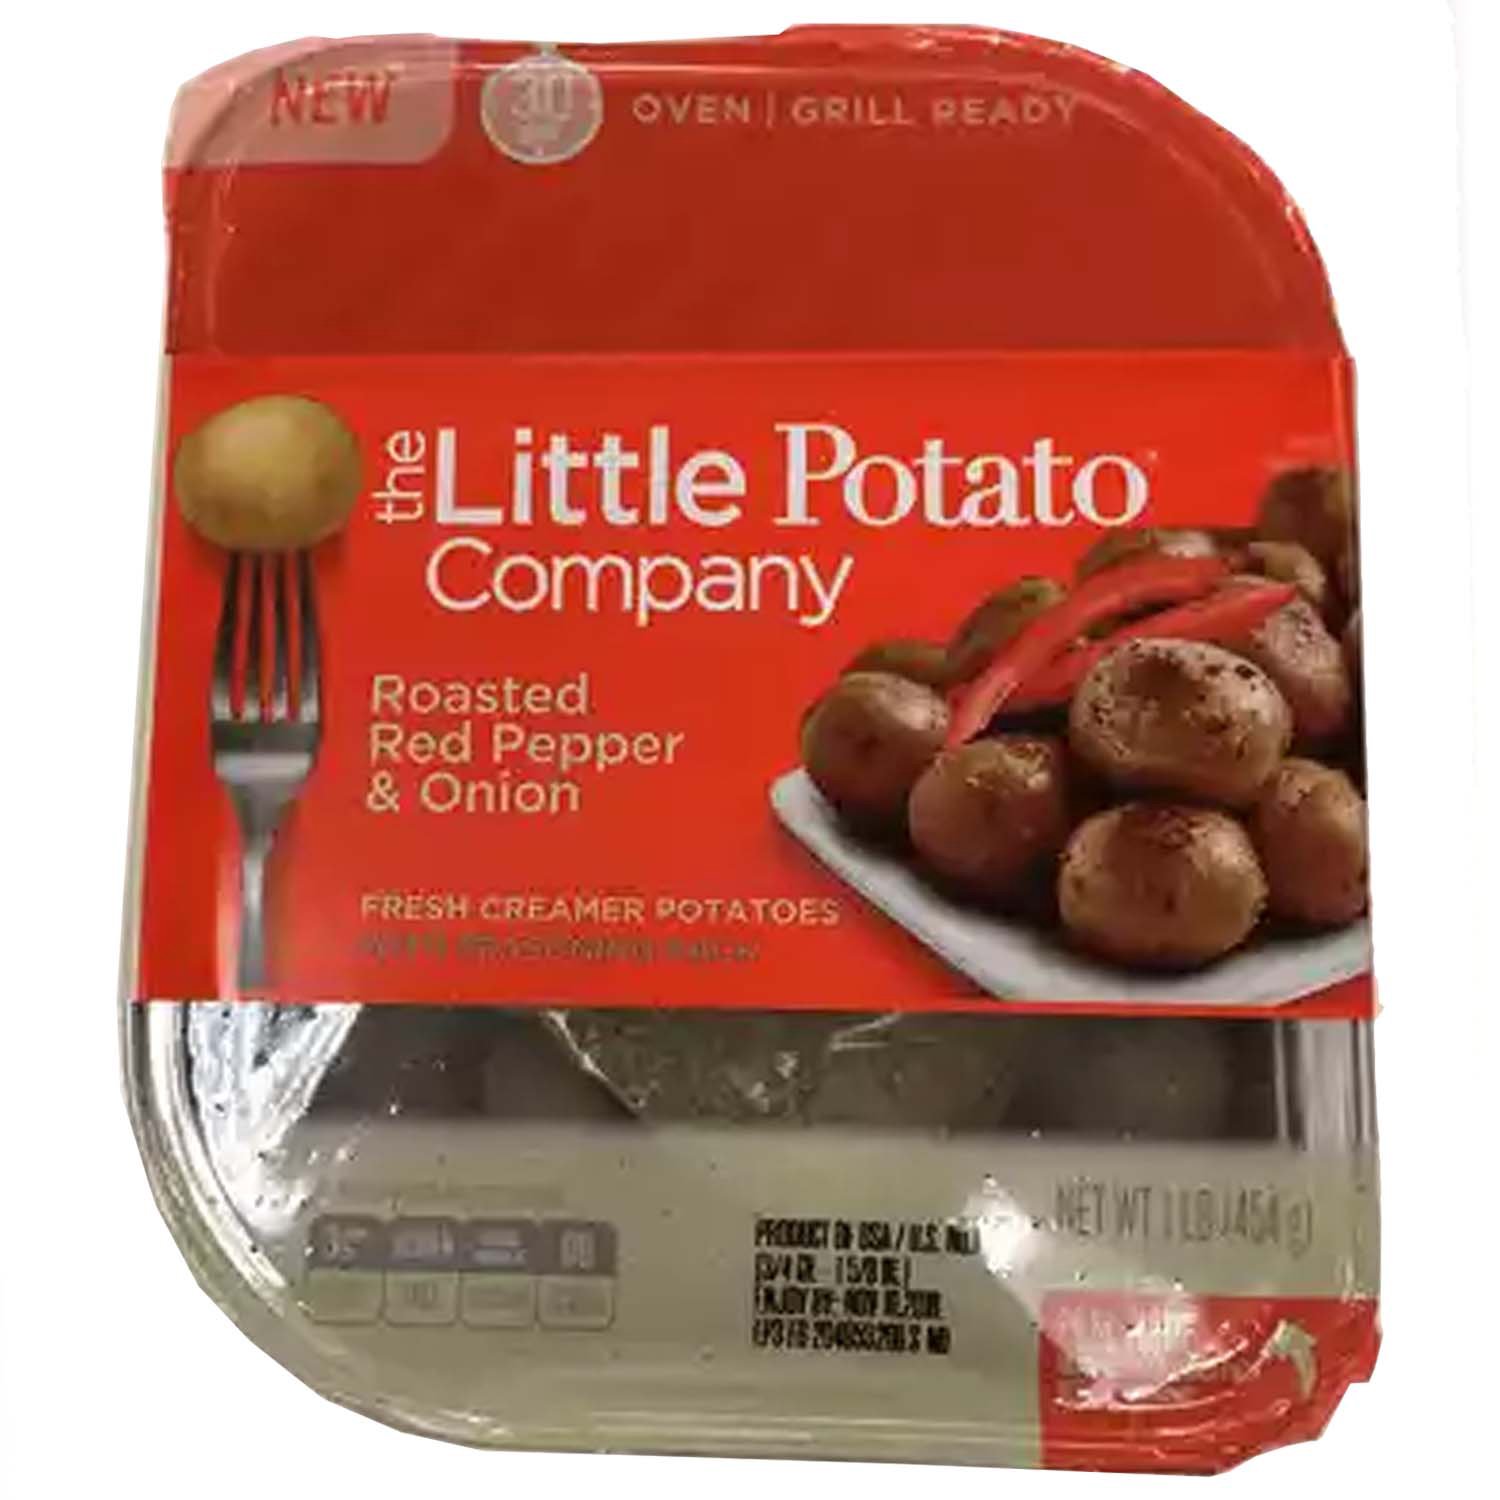 The Little Potato Company Little Duos Creamer Potatoes, 1.5 lb